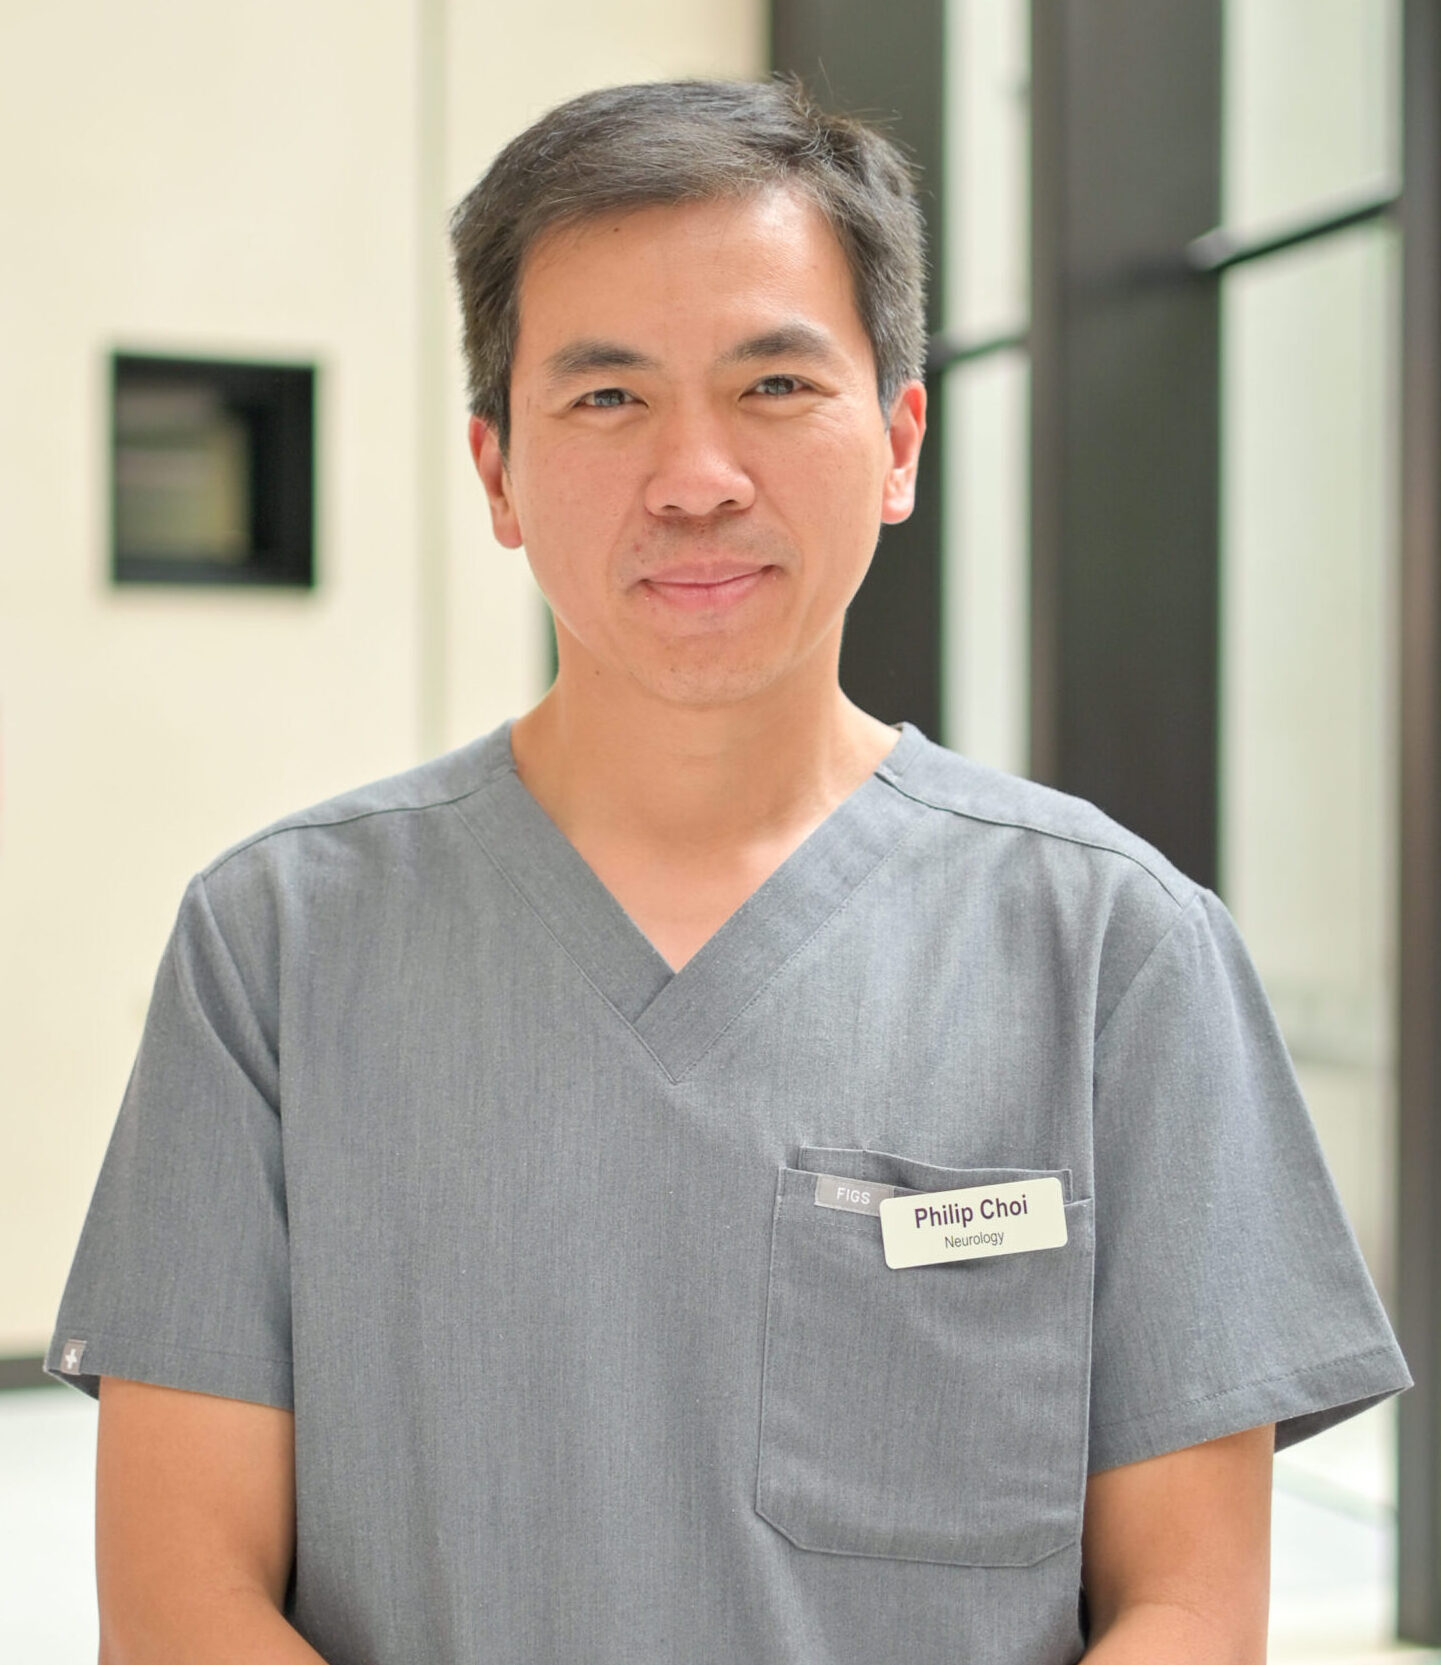 Dr Philip Choi